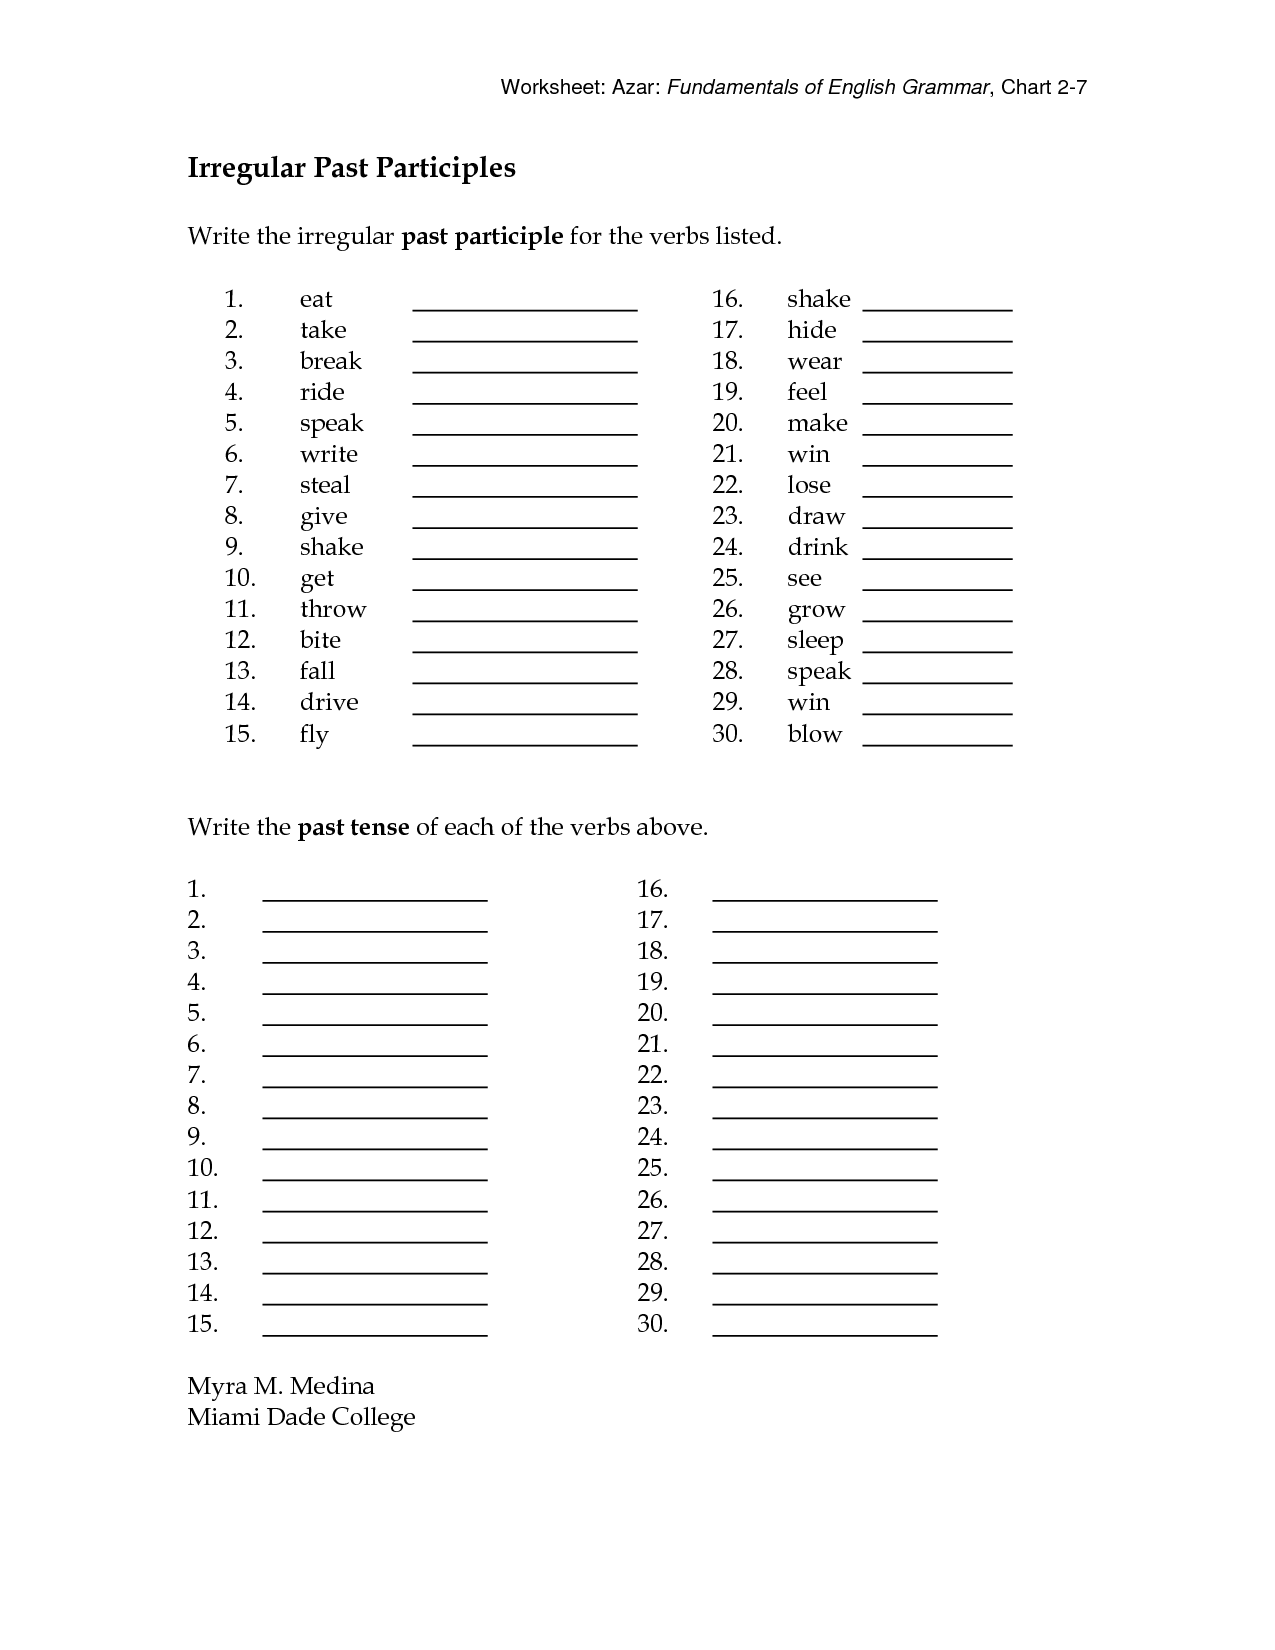 Past Participle Irregular Verbs Worksheet Pdf